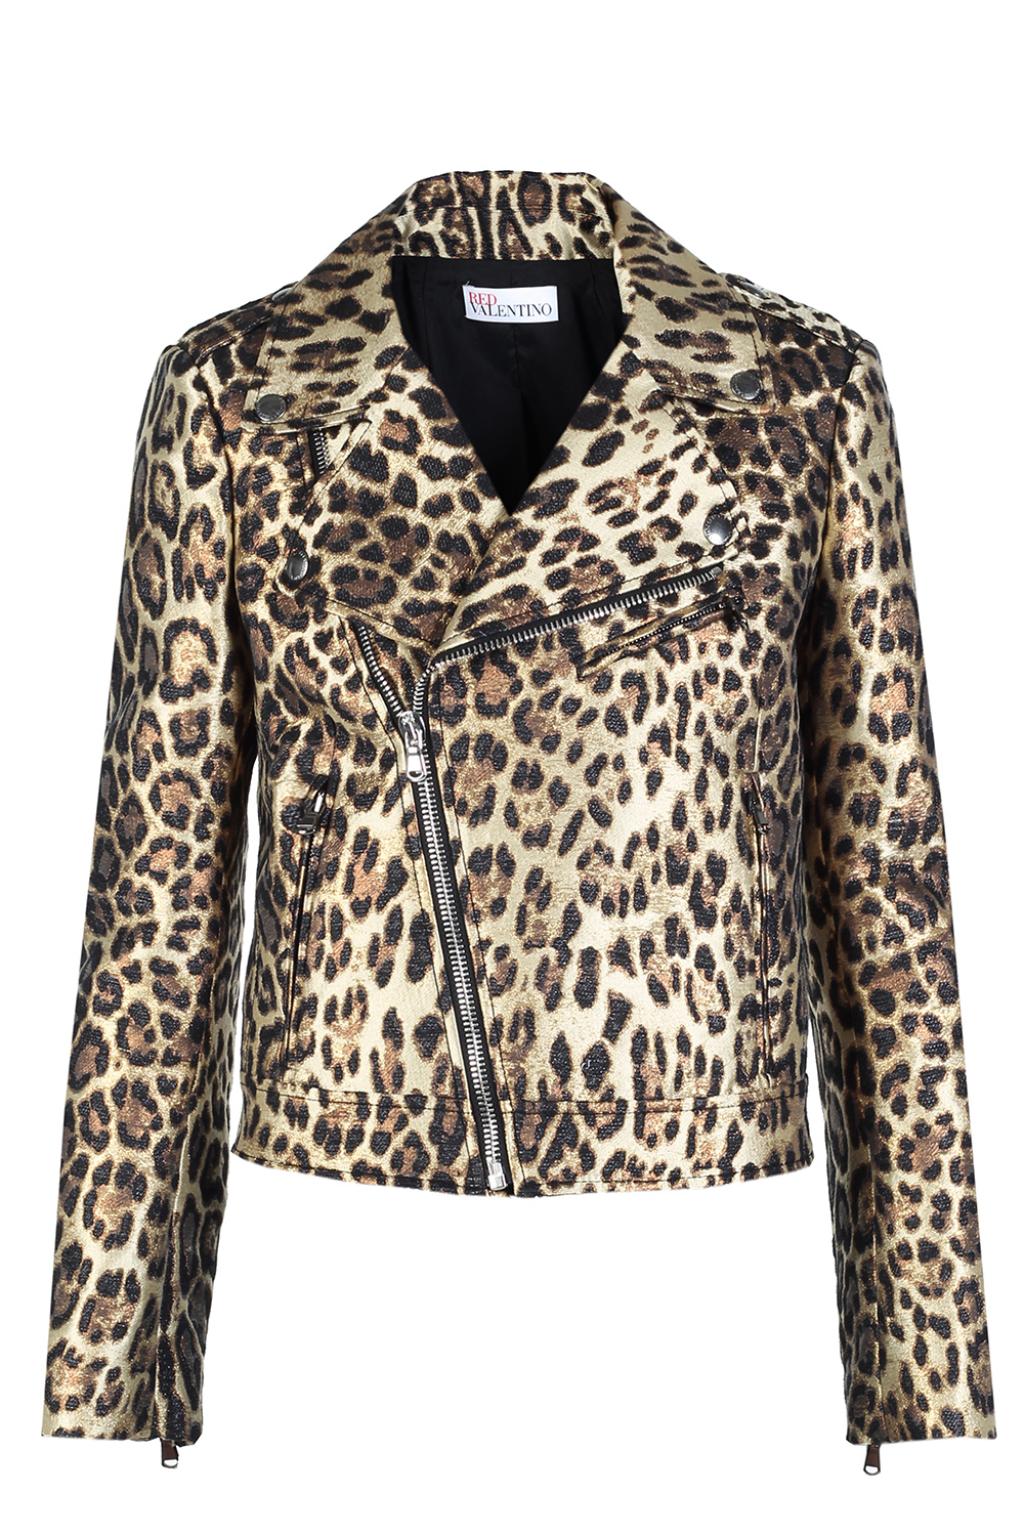 Red Valentino Leopard print biker jacket | Women's Clothing | Vitkac